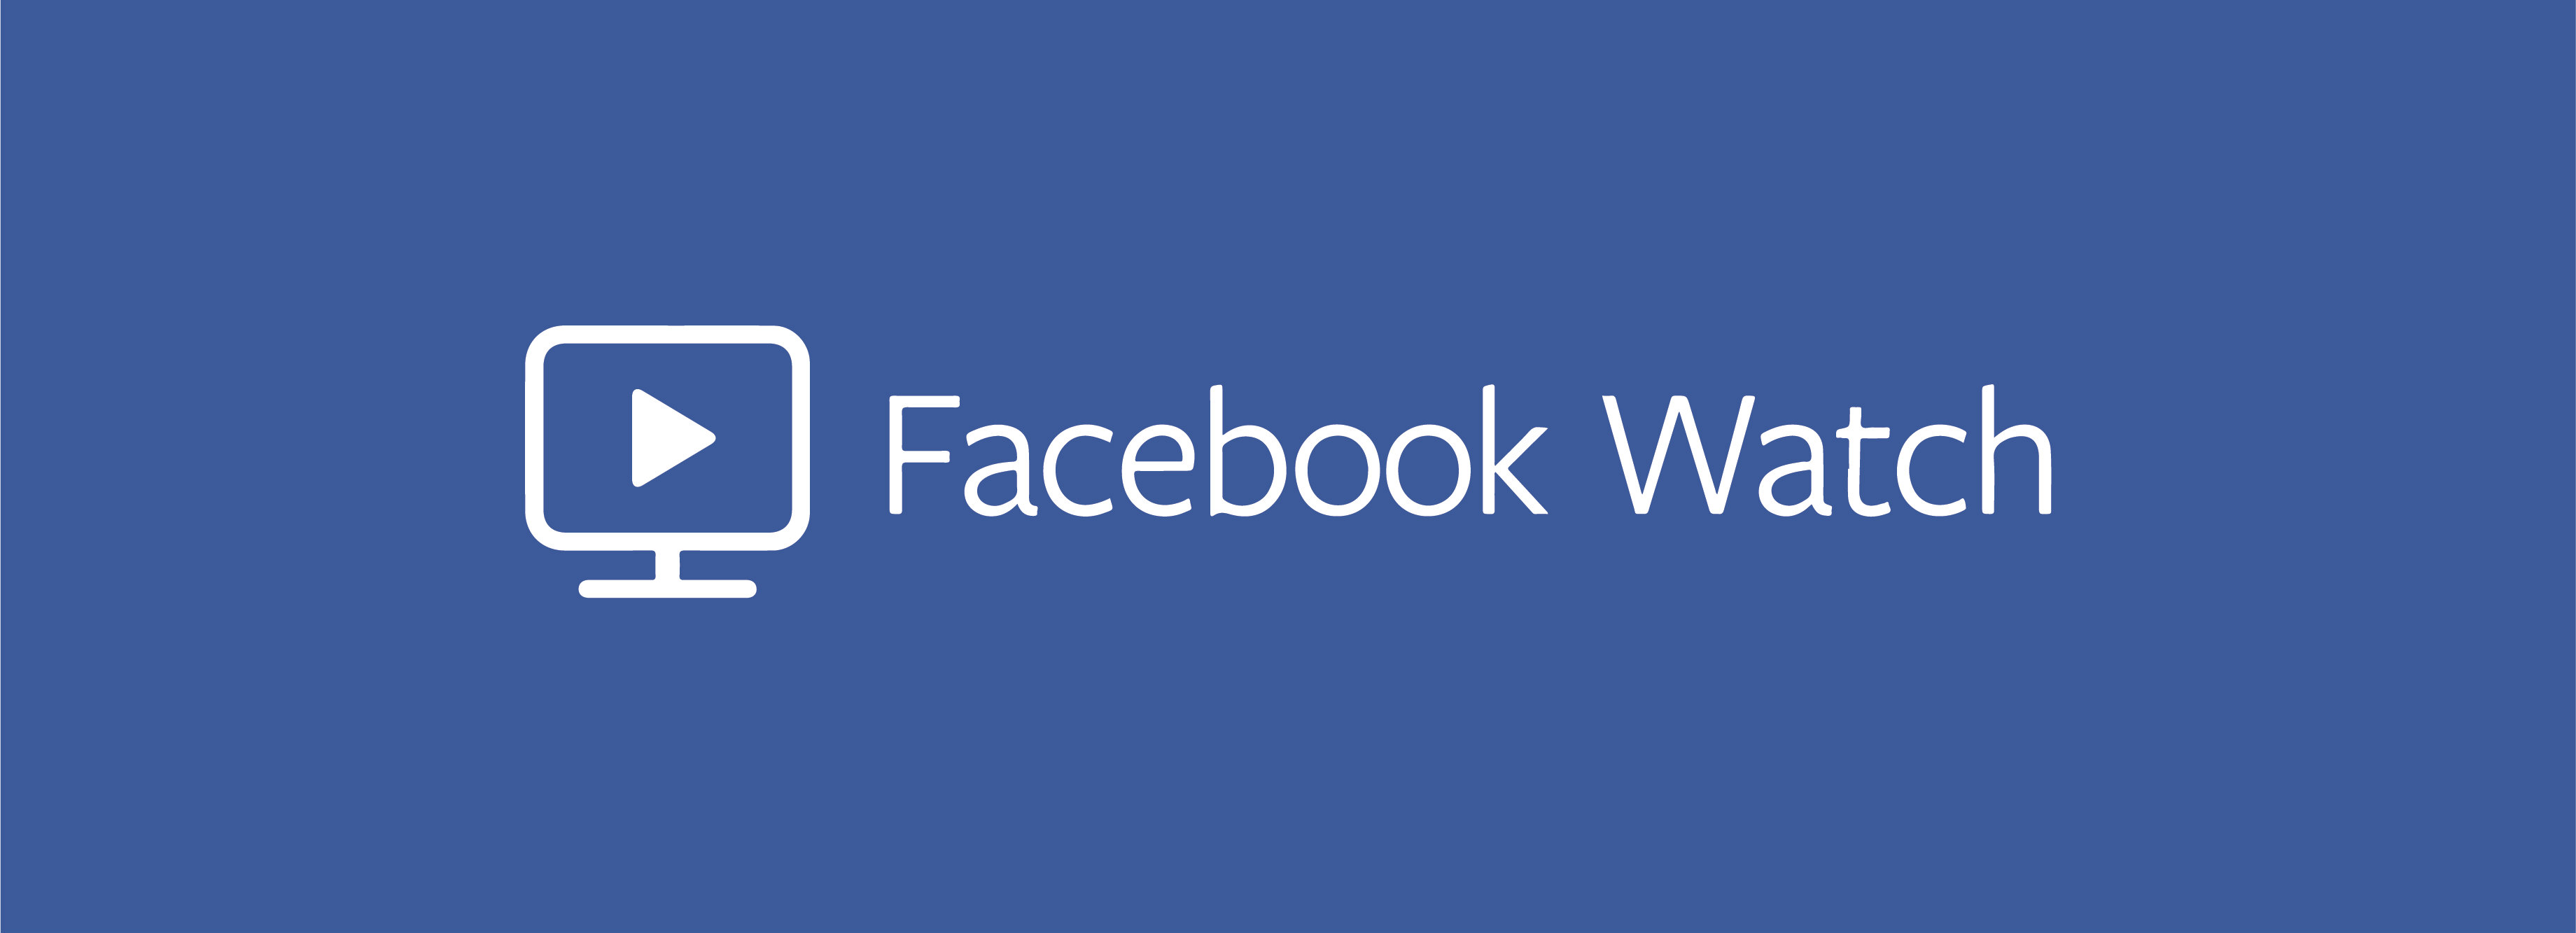 Facebook Watch enfin lancé en France